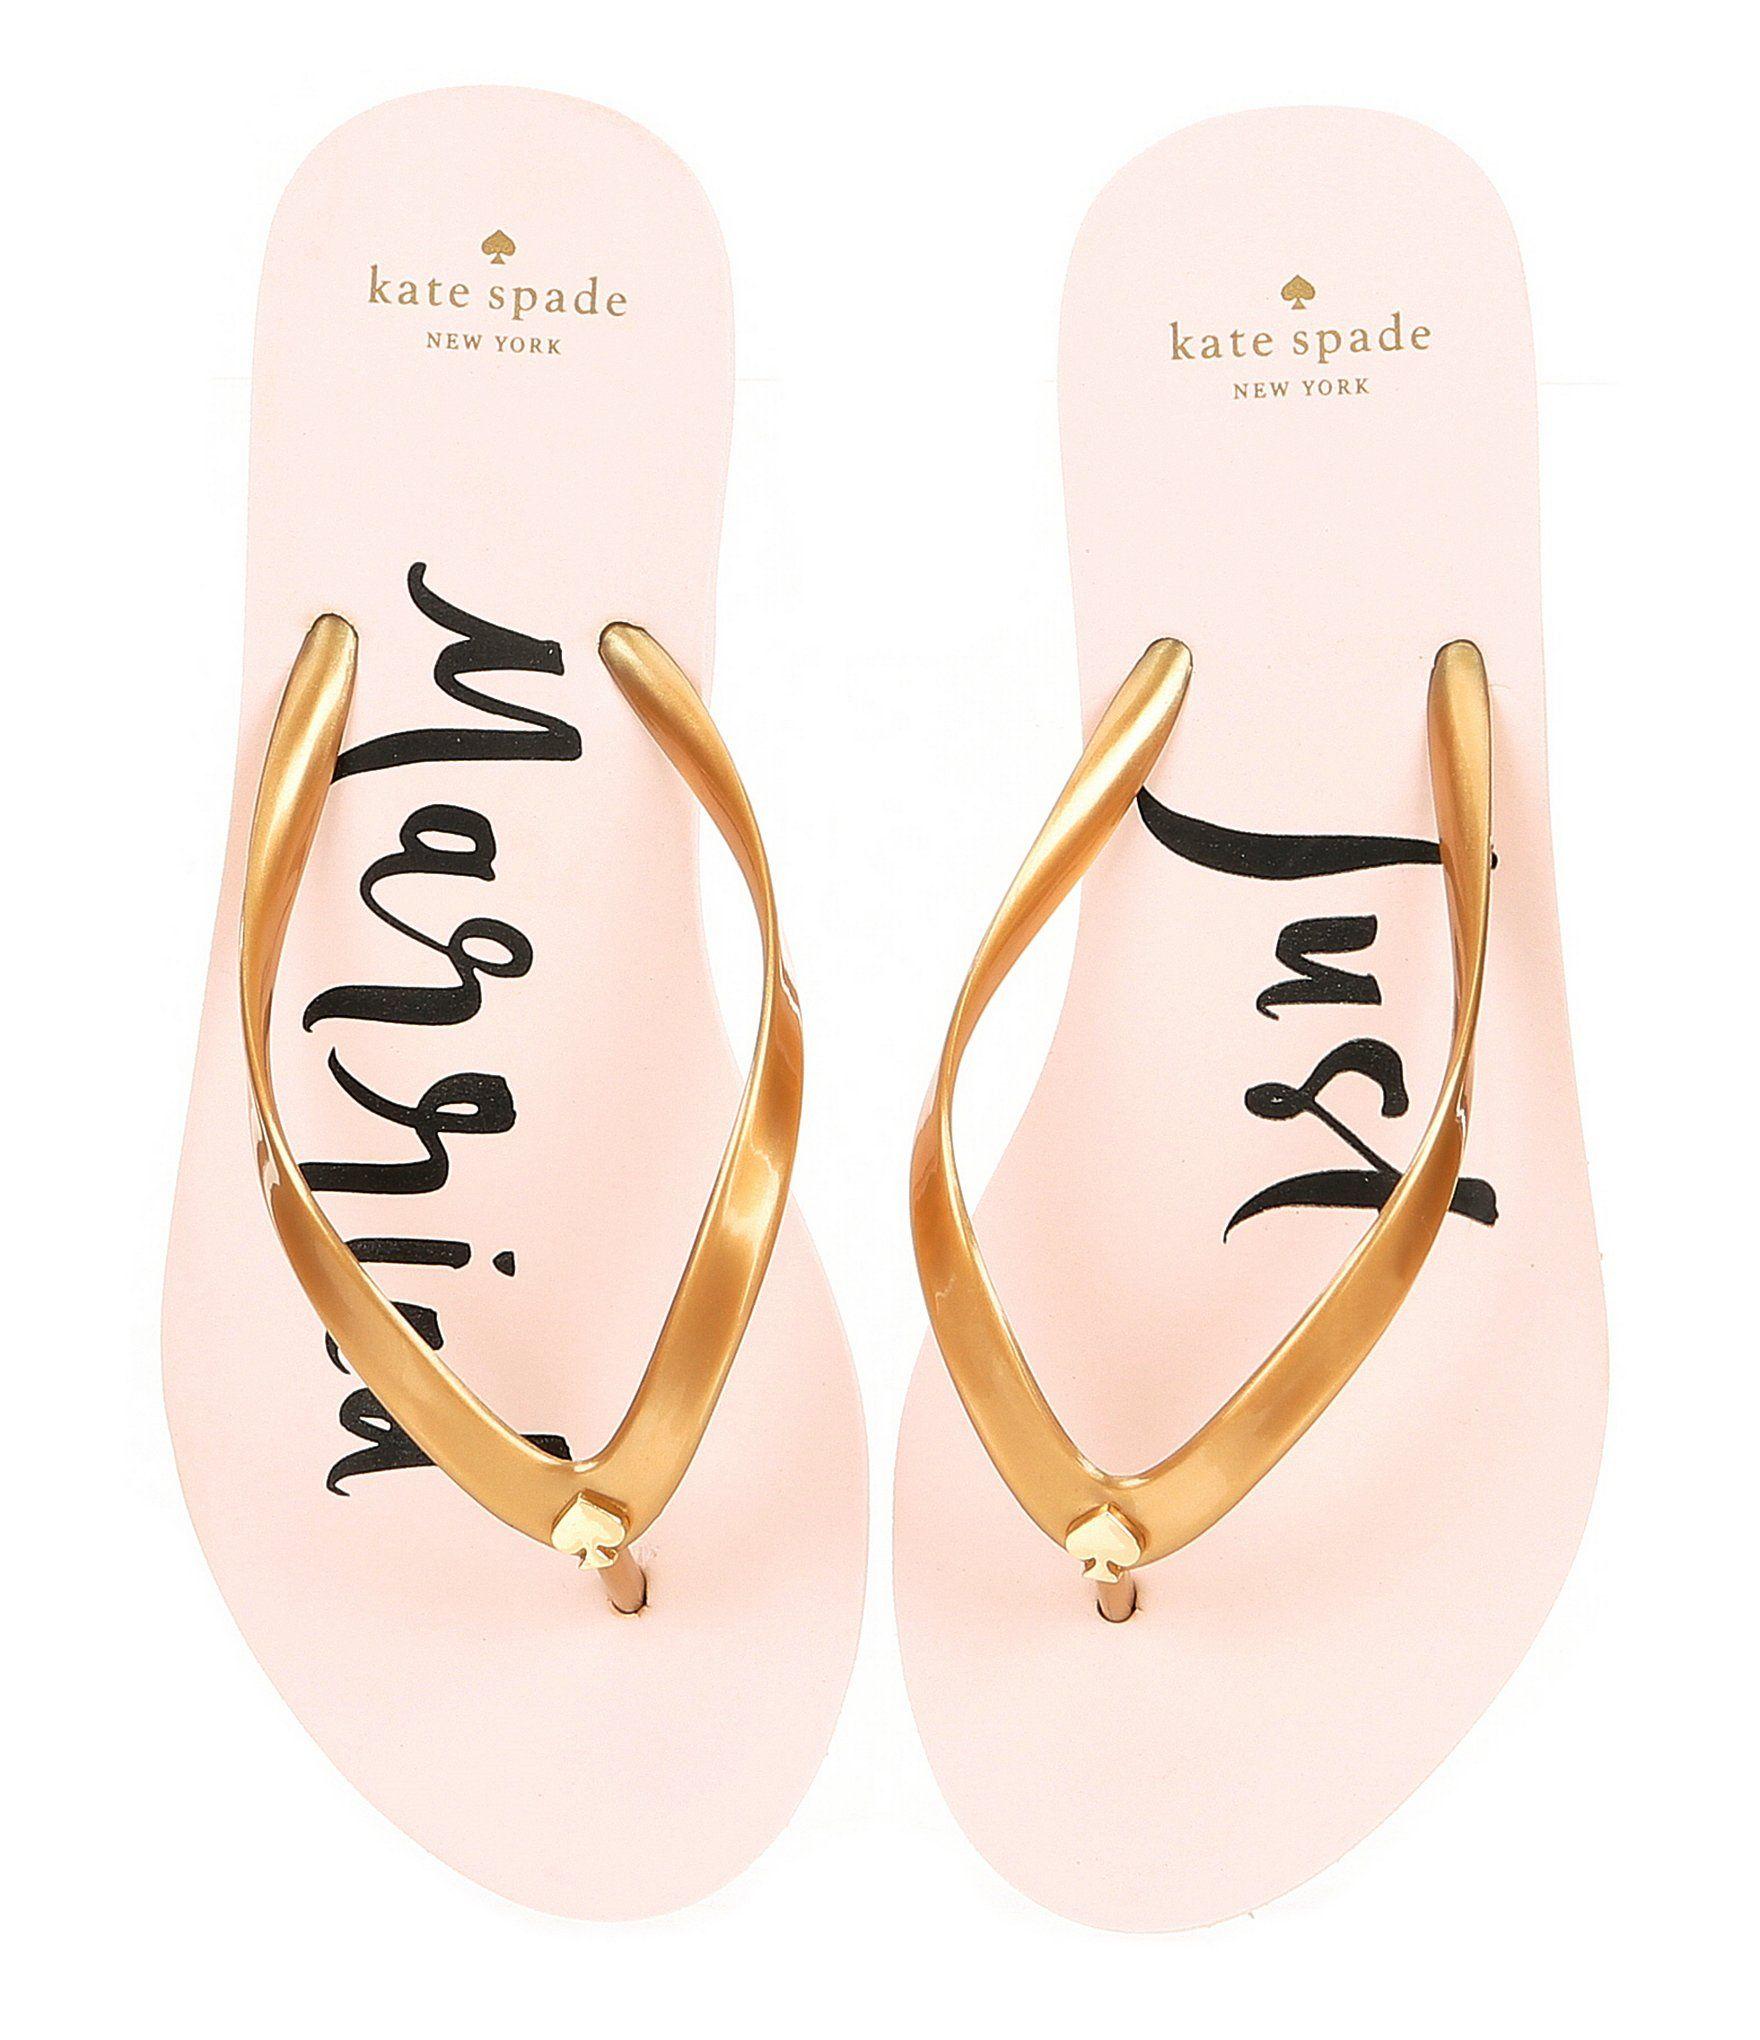 Gold Kate Spade Logo - kate spade new york Women's Shoes